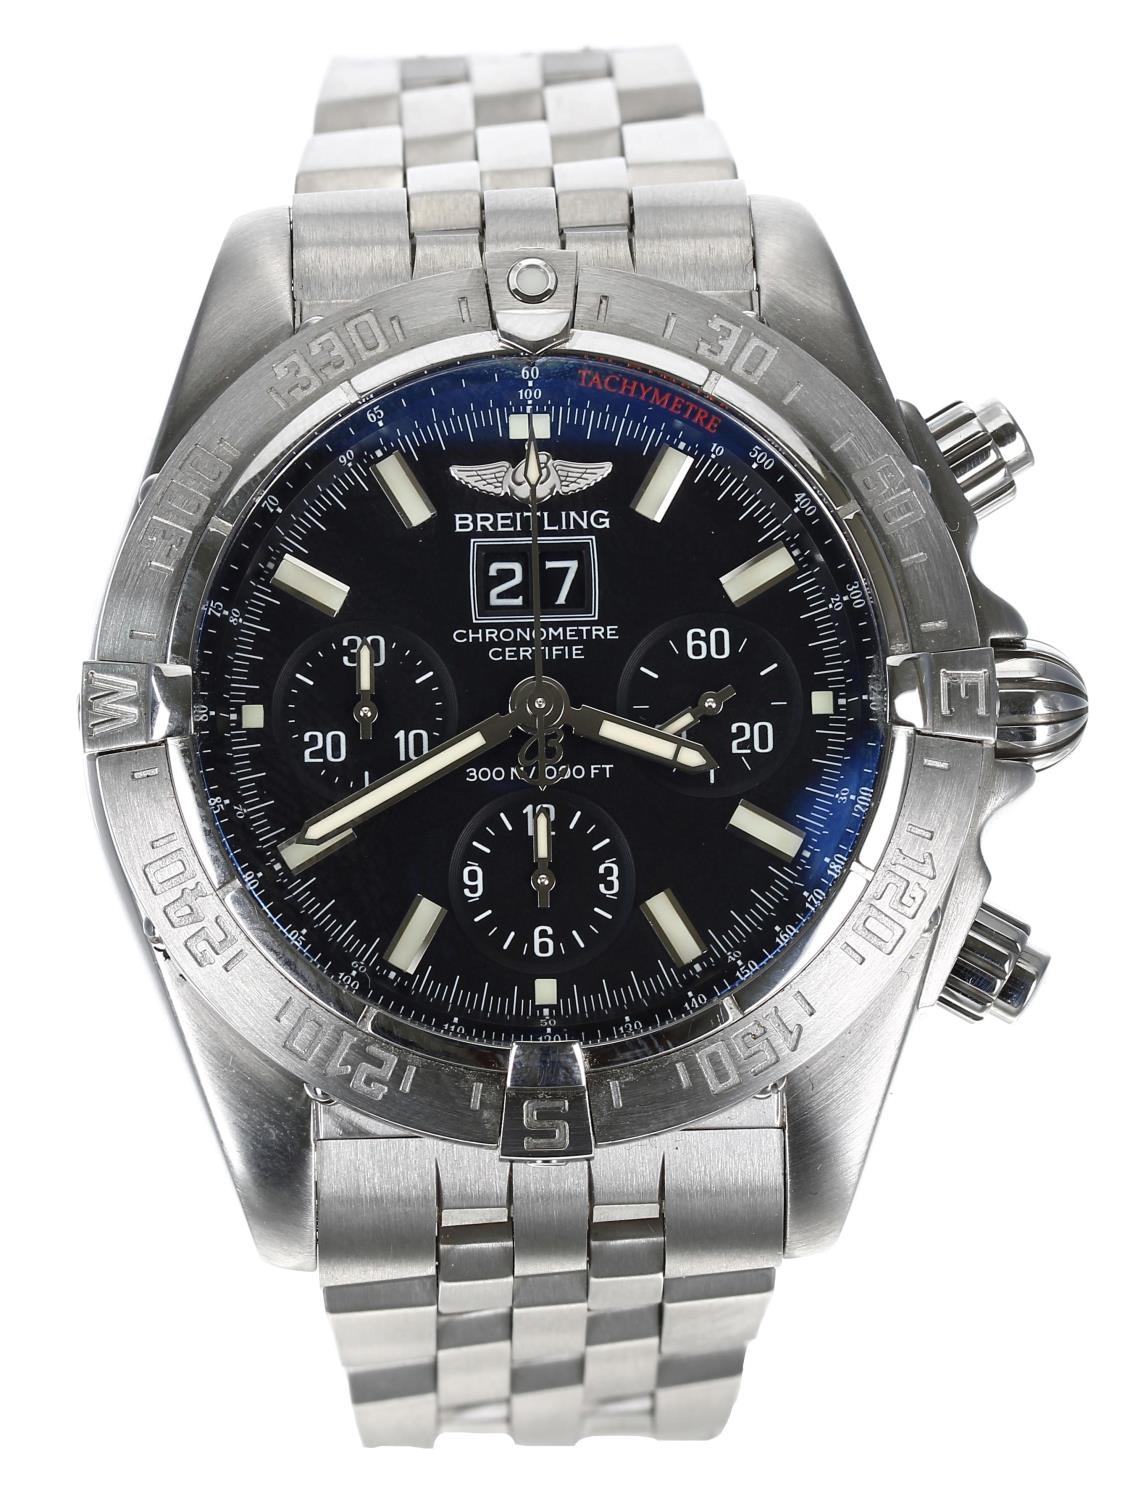 Breitling Blackbird Chronograph Chronometre automatic stainless steel gentleman's wristwatch, - Image 2 of 4